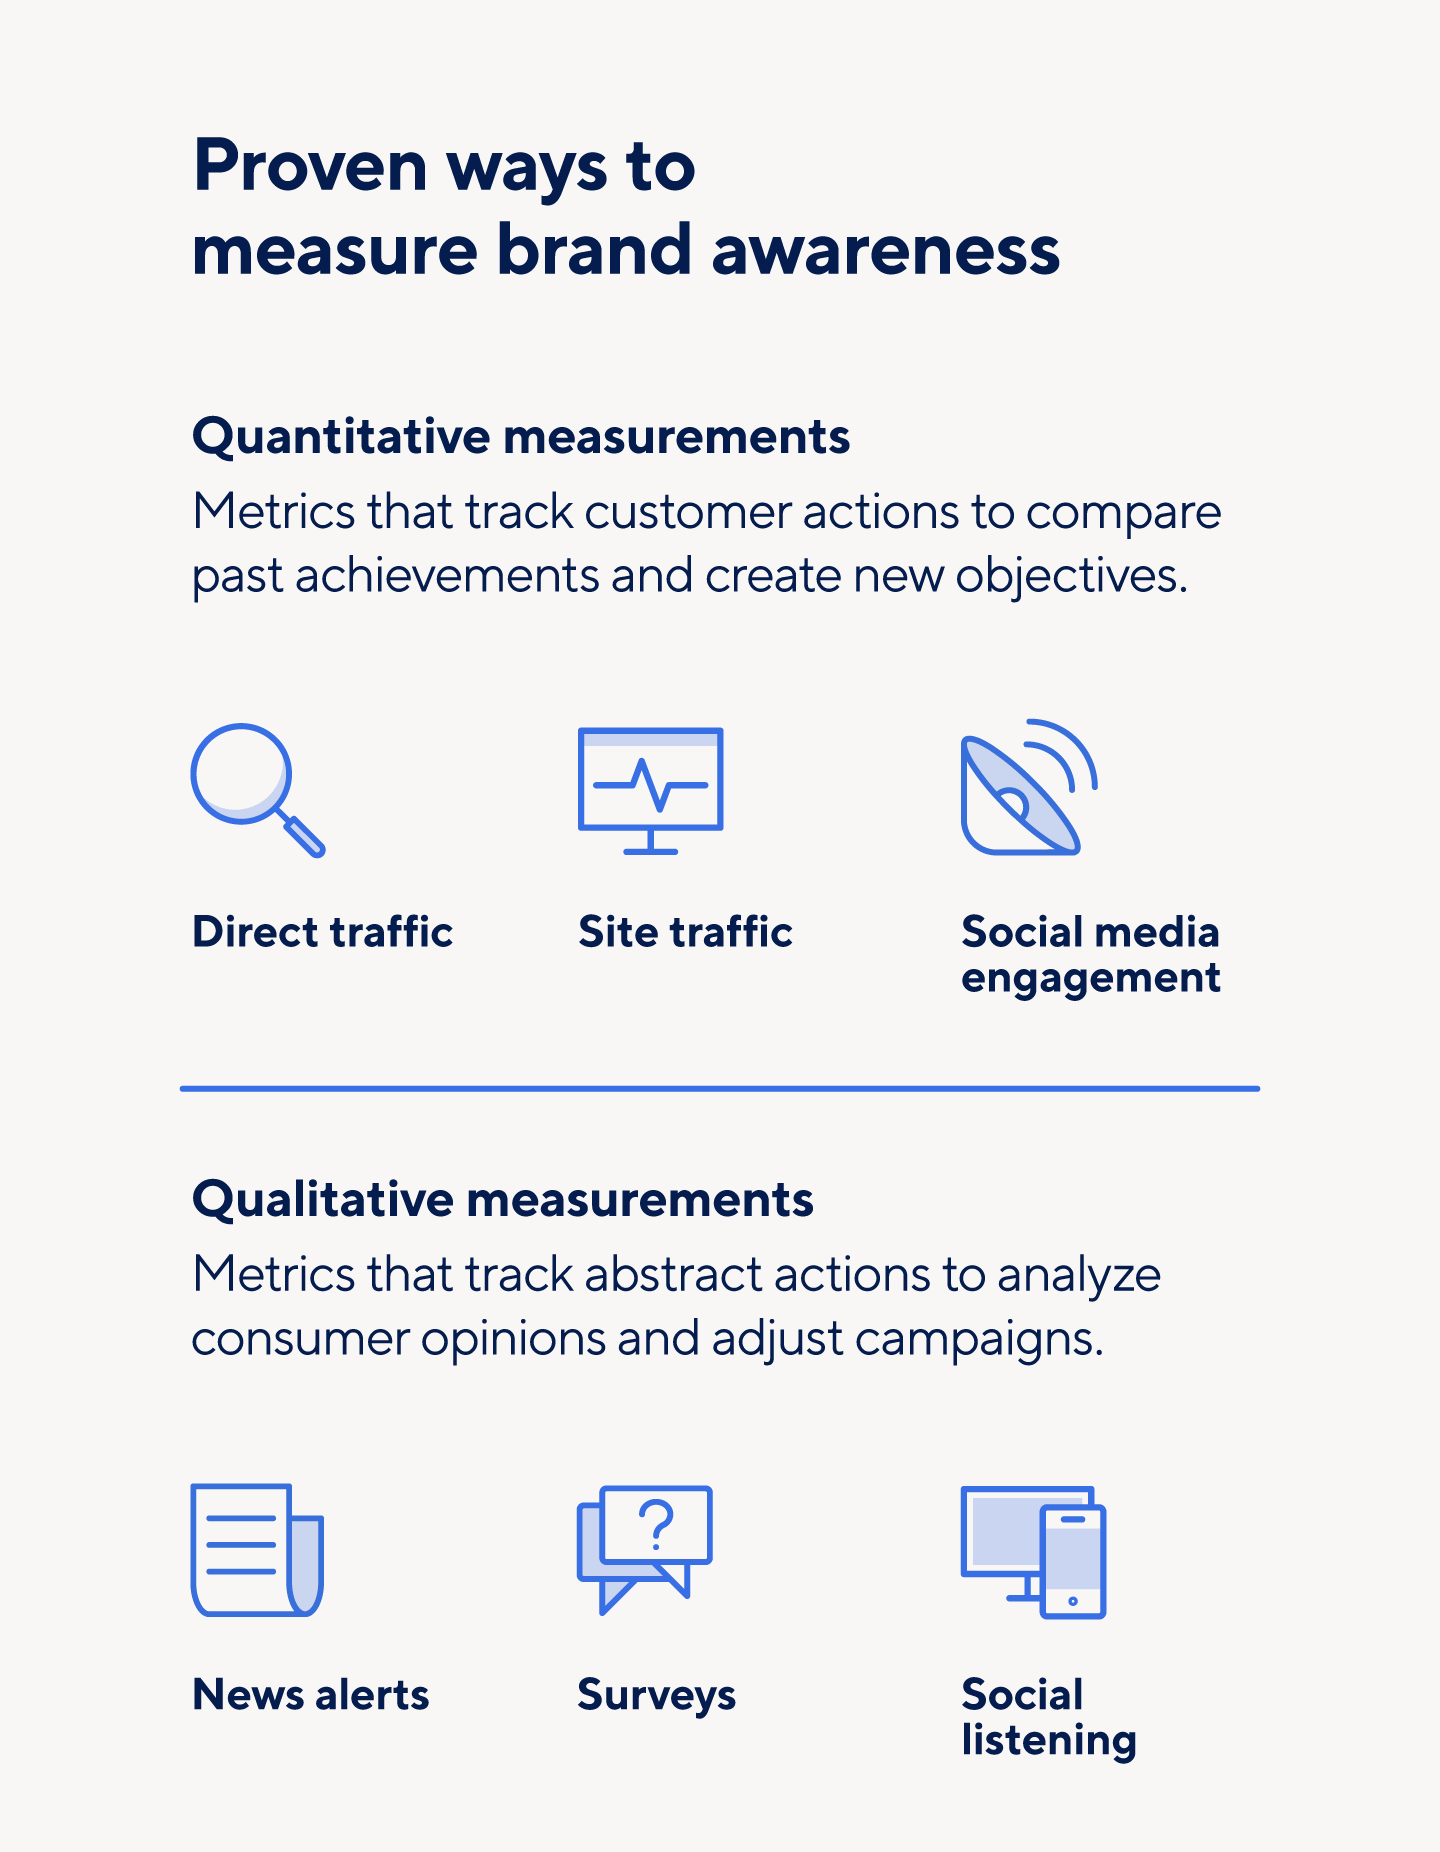 Use quantitative and qualitative measurements to measure brand awareness.